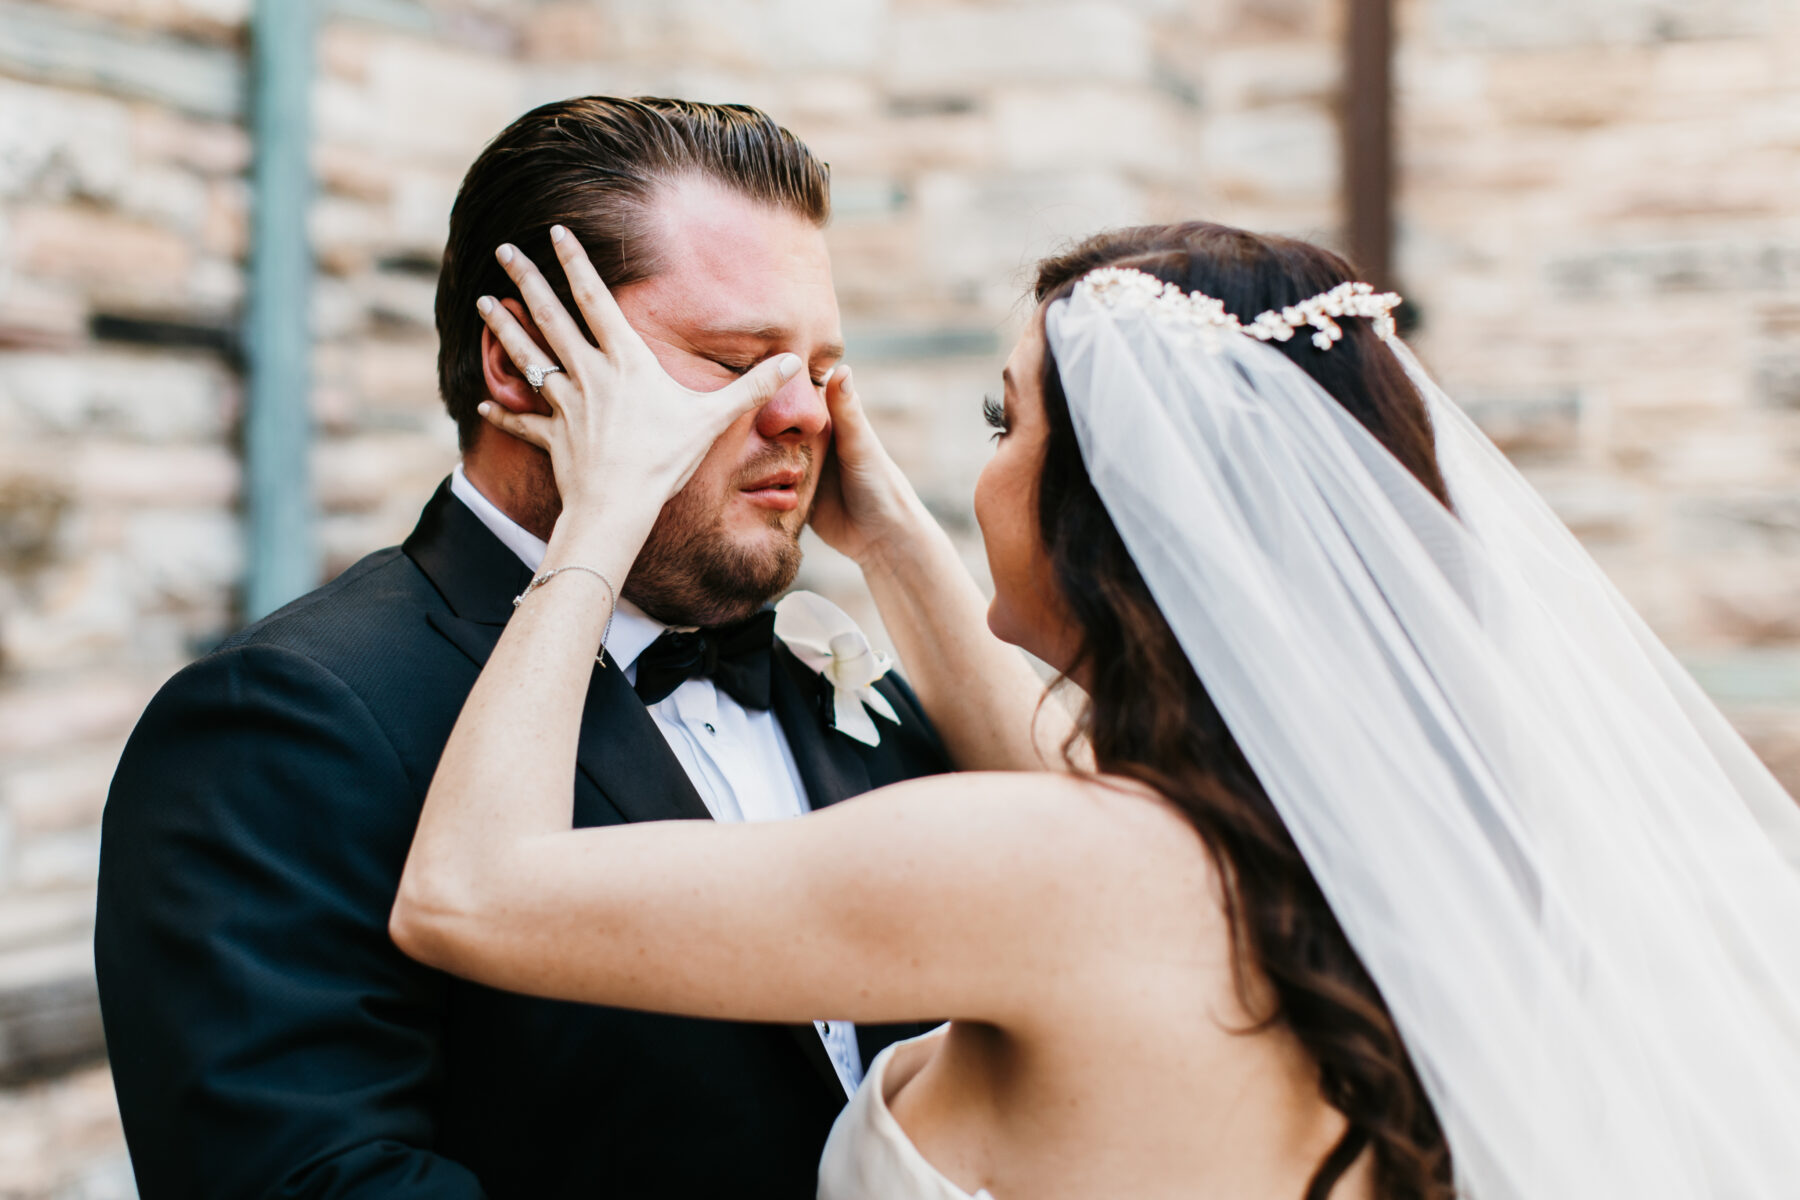 Steph Sorenson Nashville wedding photography | Nashville Bride Guide